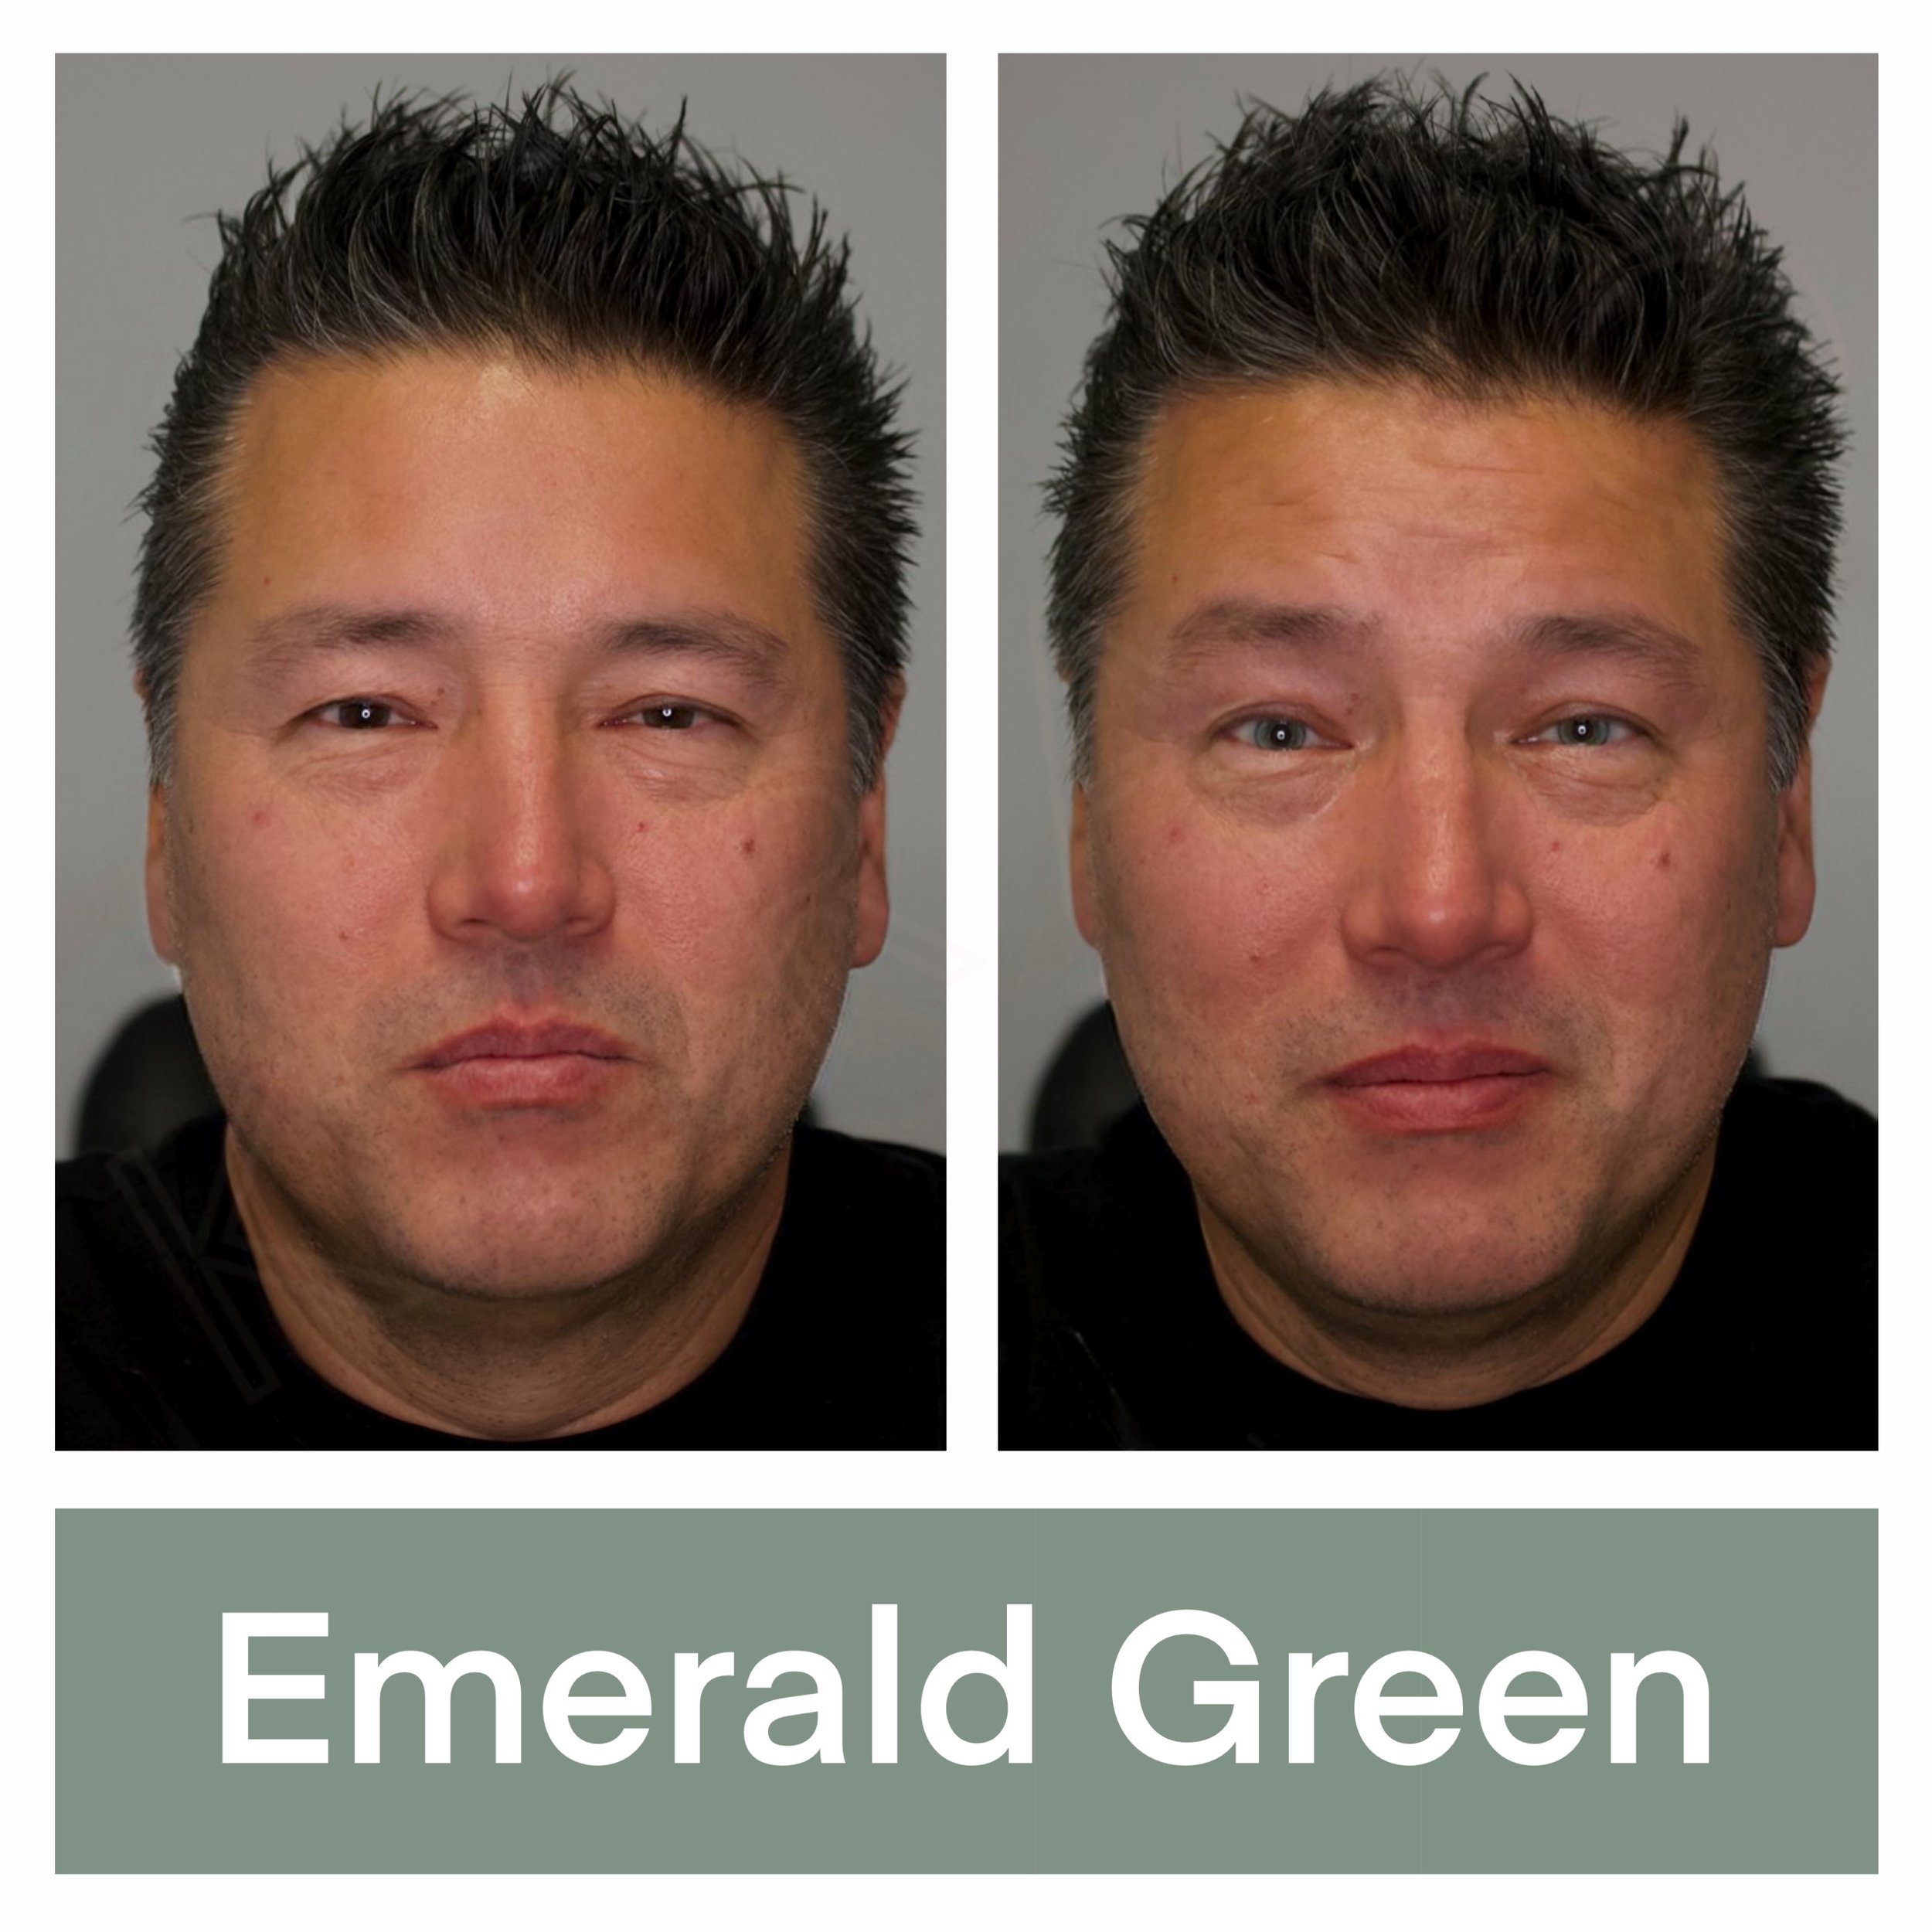 Kerato Procedure with Emerald Green Pigment